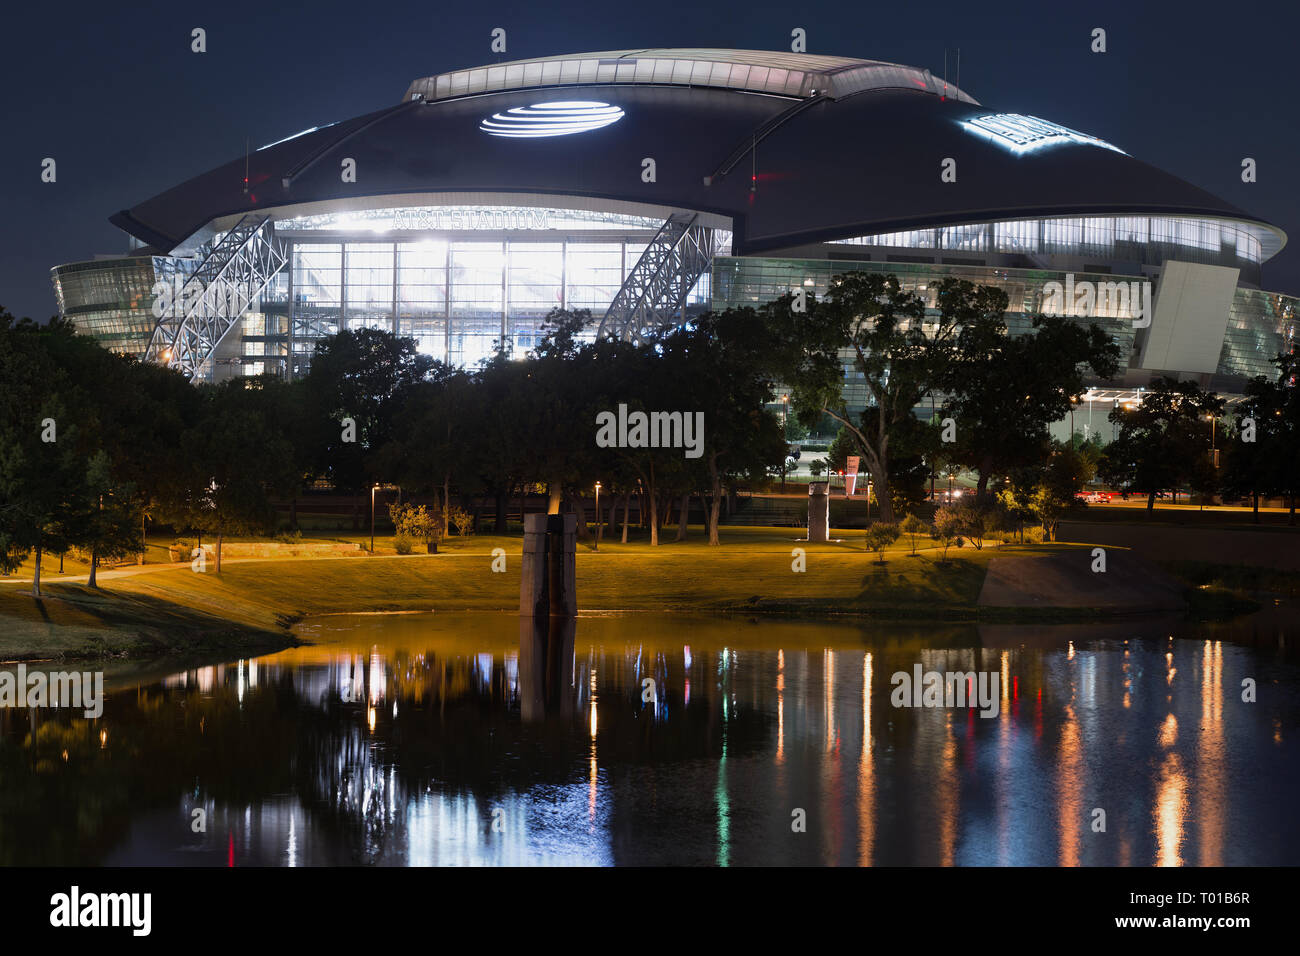 Dallas Cowboys Football Stadium 031819 Stock Photo